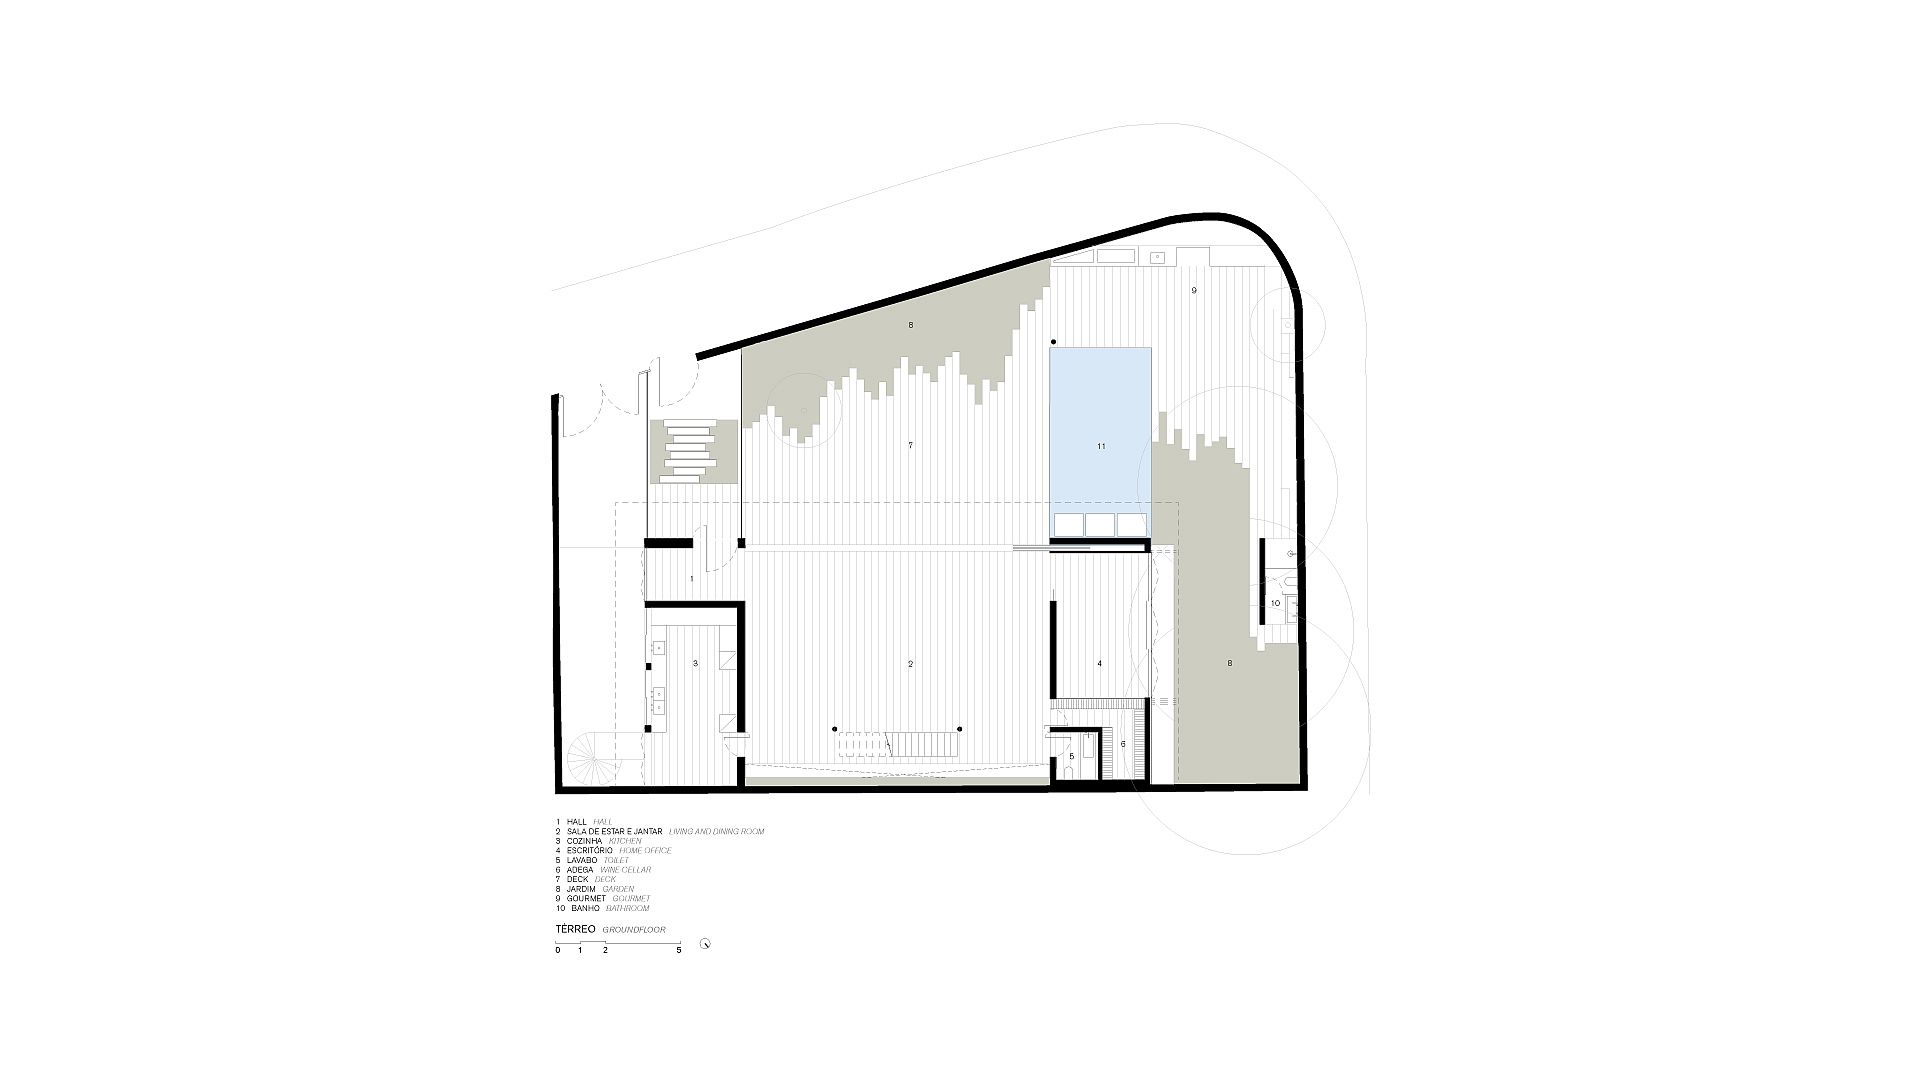 Ground level floor plan of the JZL House